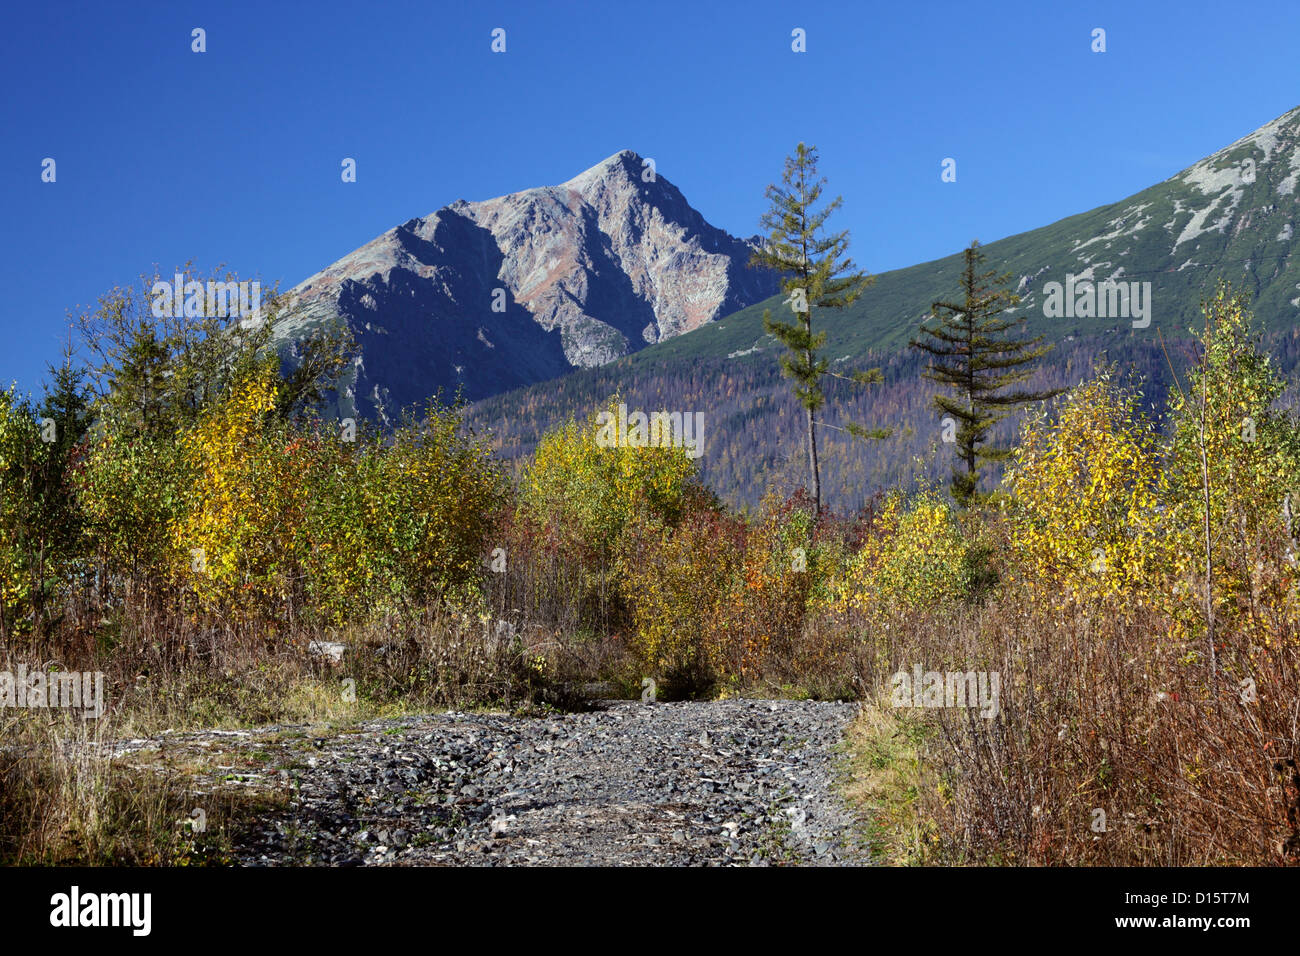 Lomnicky Stit in the Tatras Mountains region of Slovakia Stock Photo